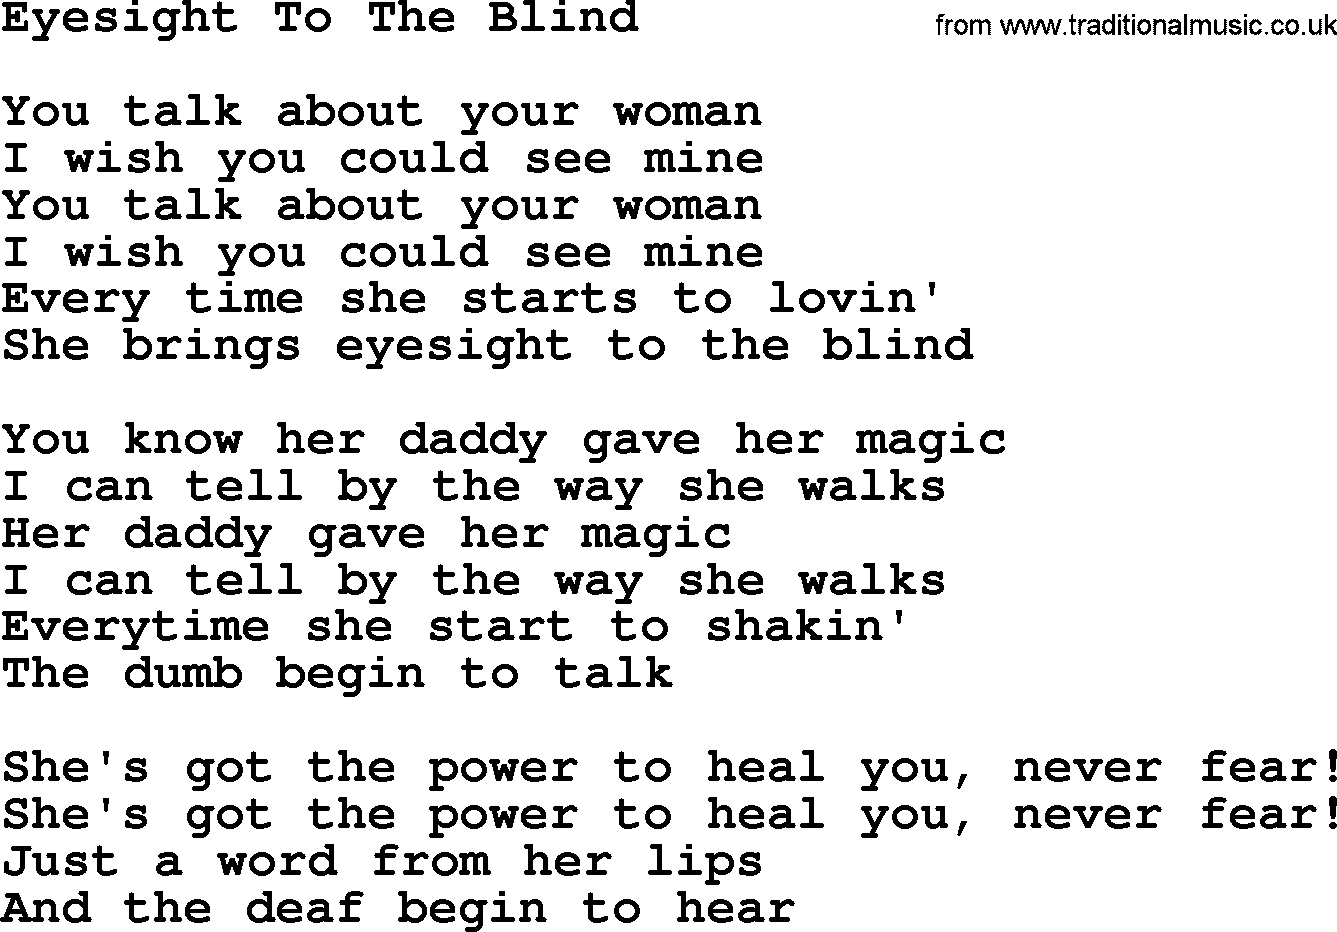 The Byrds song Eyesight To The Blind, lyrics